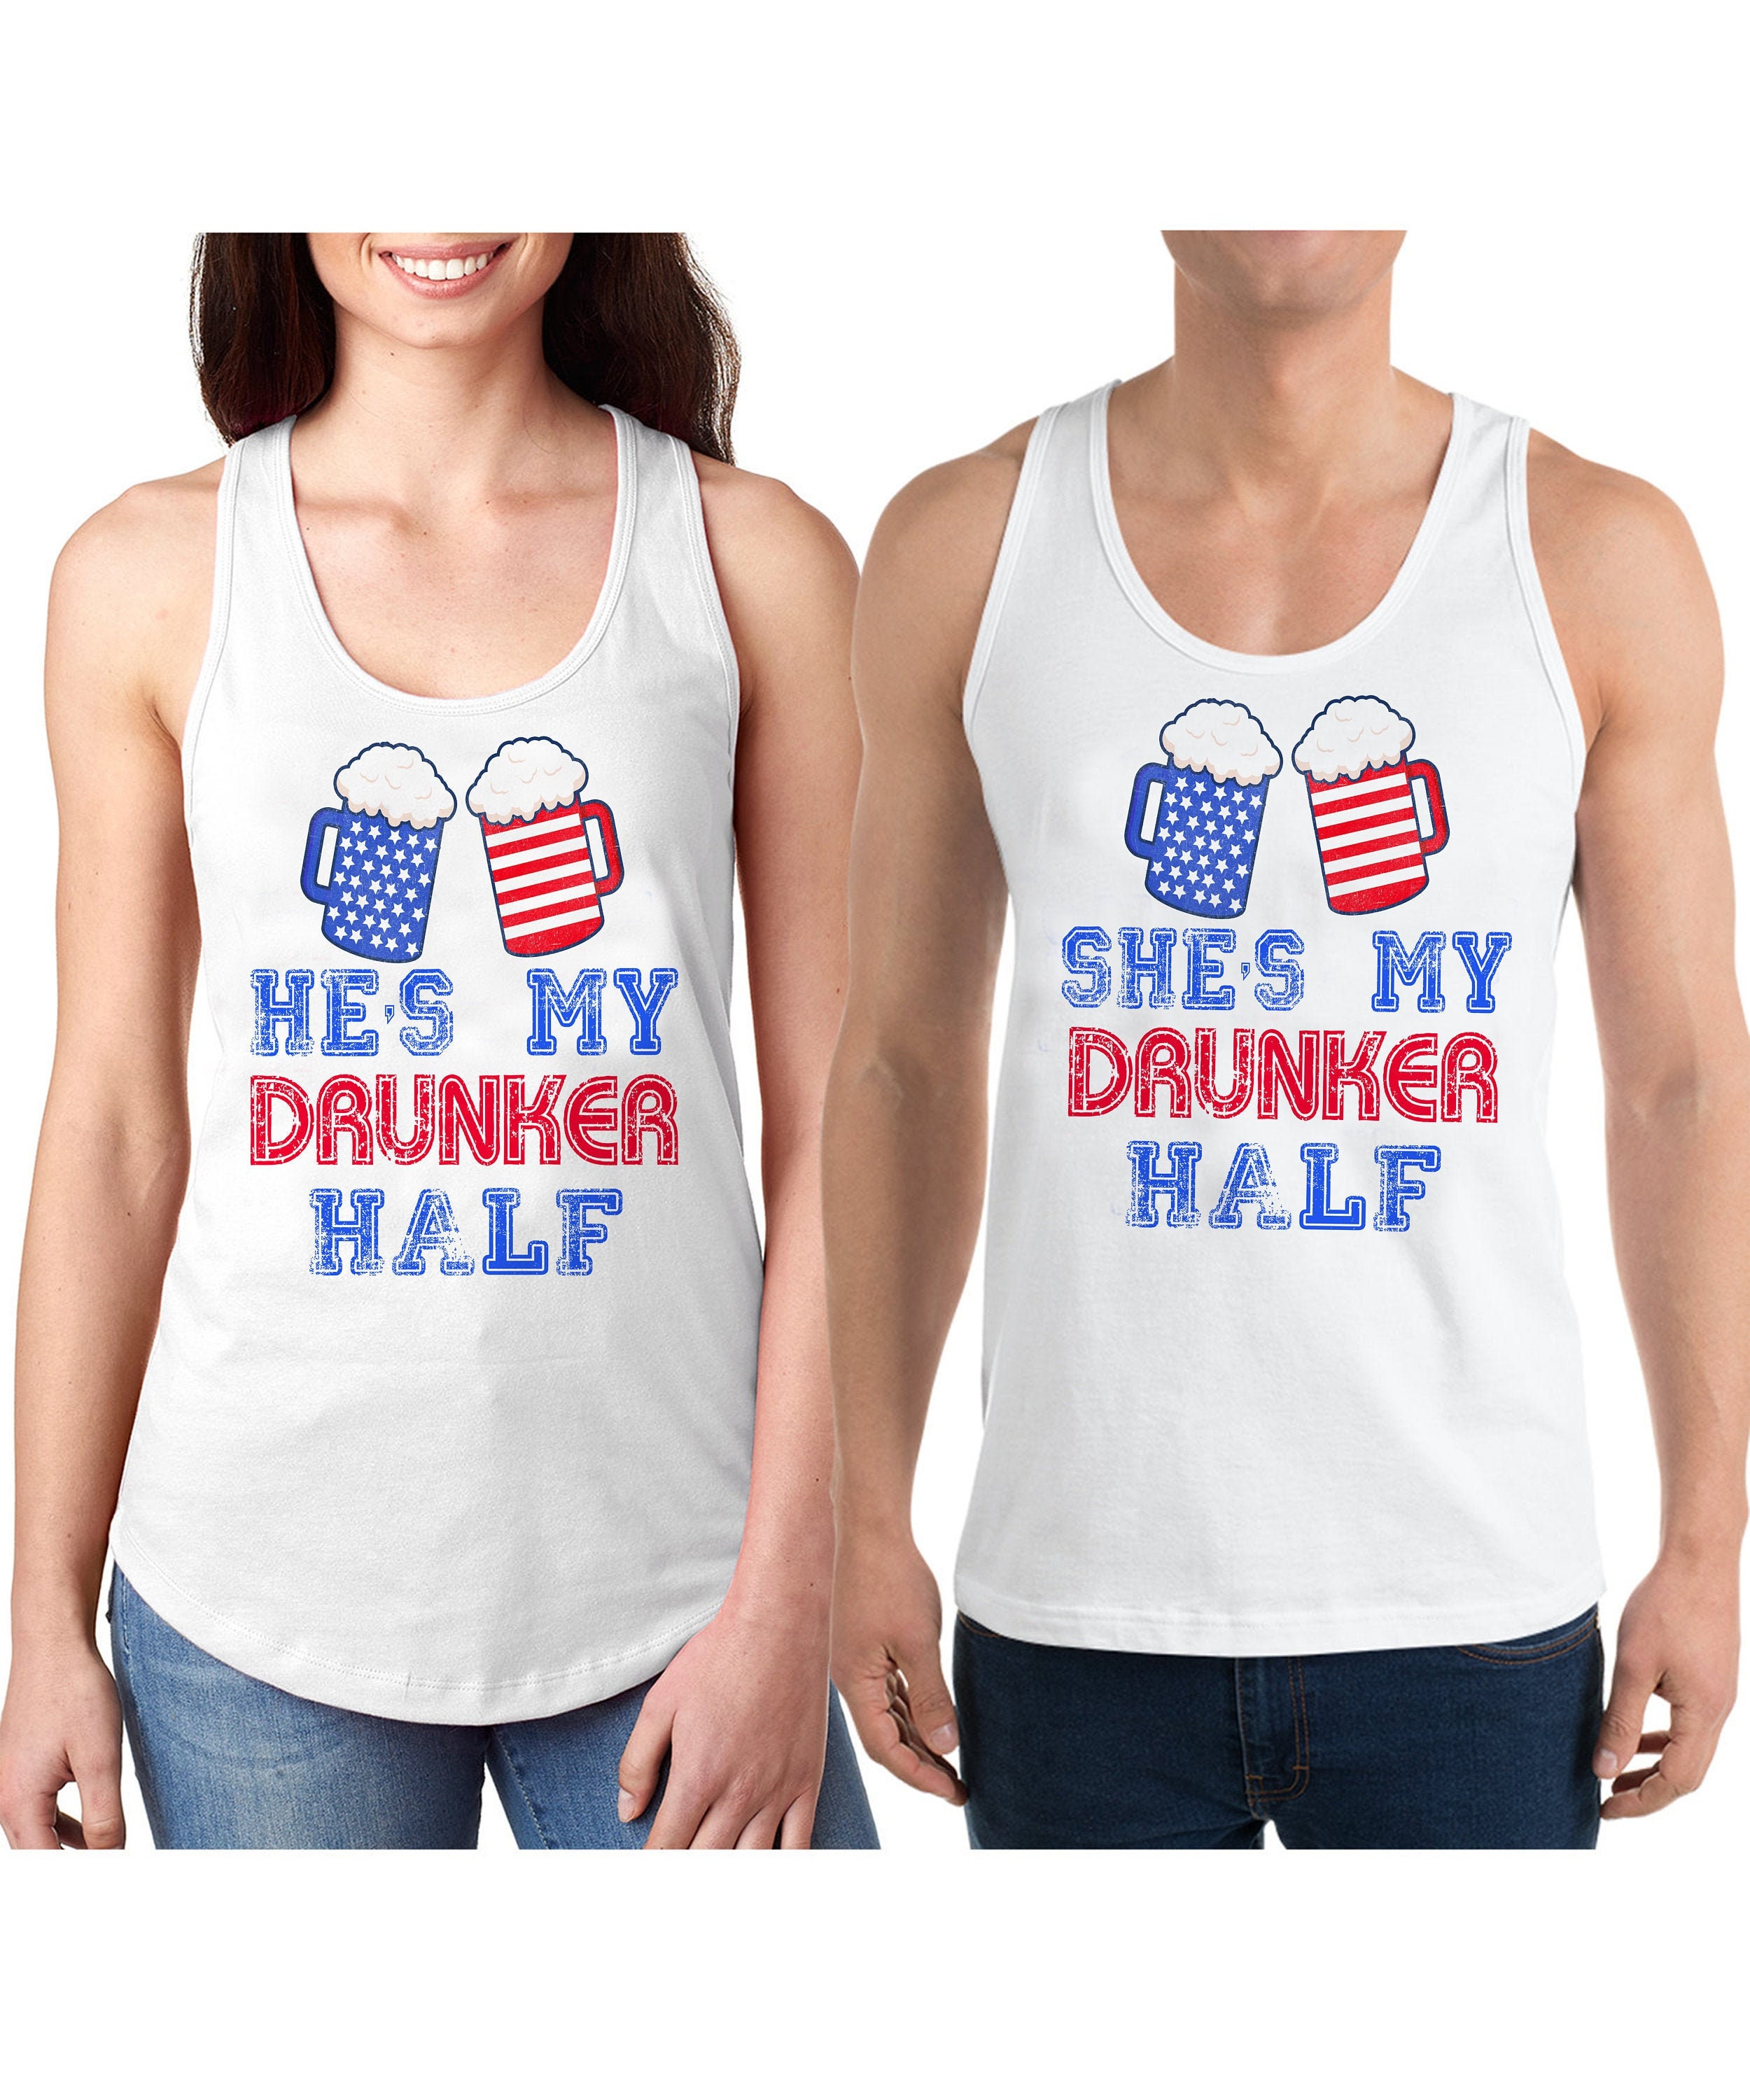 Drunker Half 4th July Shirt Couple 4th July Shirt Matching - Etsy